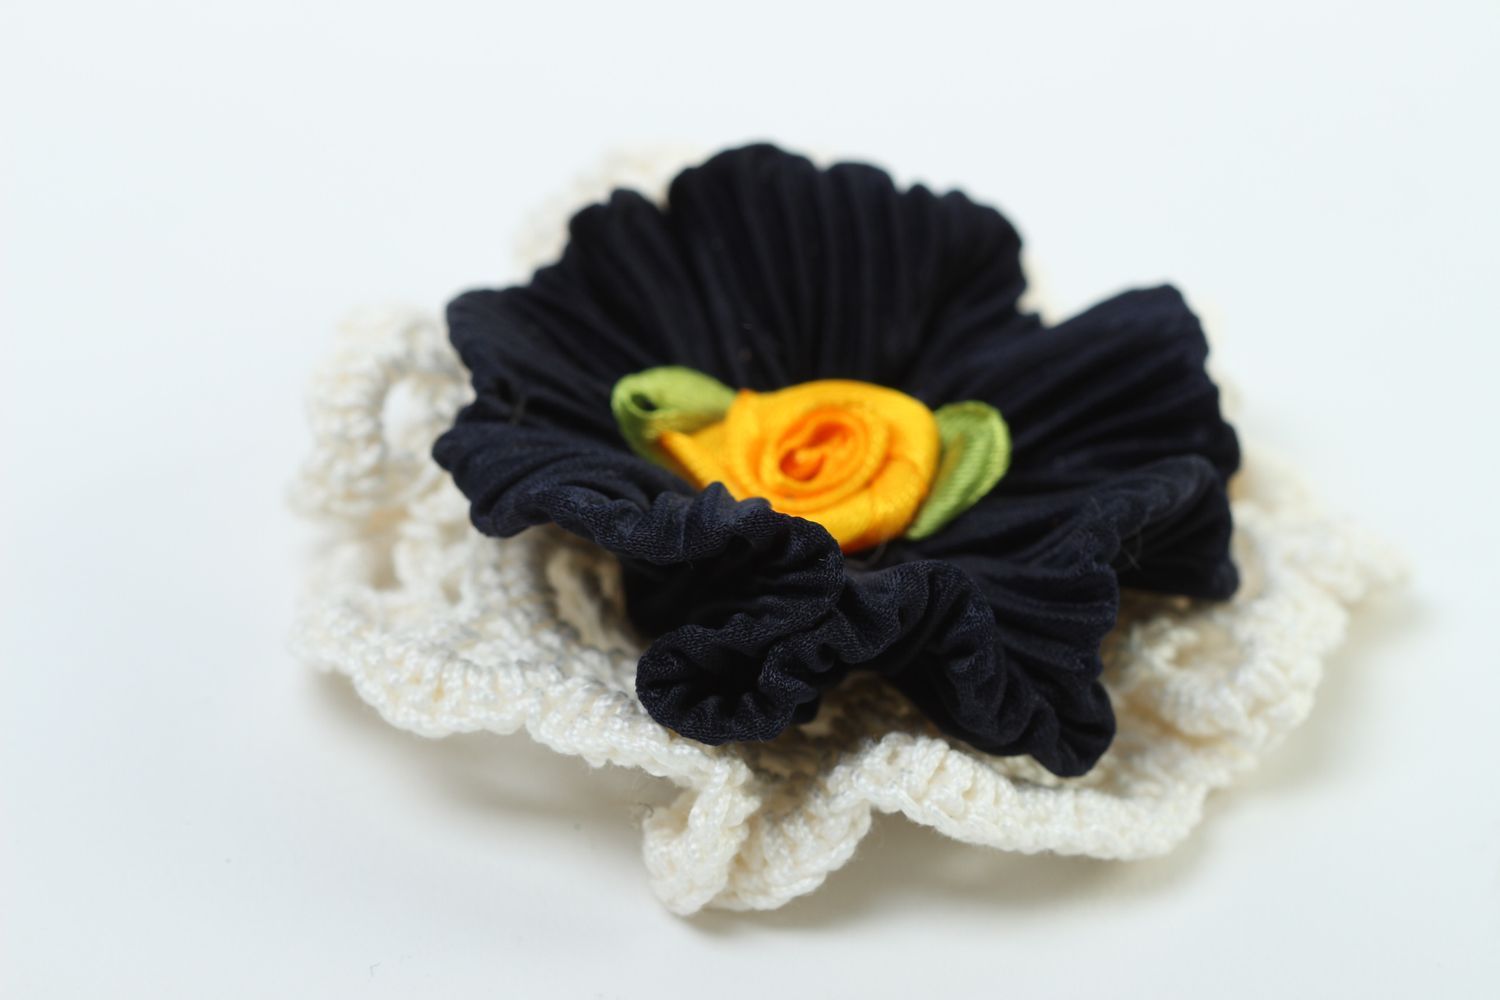 Handmade crochet flower decorative flowers jewelry craft supplies crochet ideas photo 3